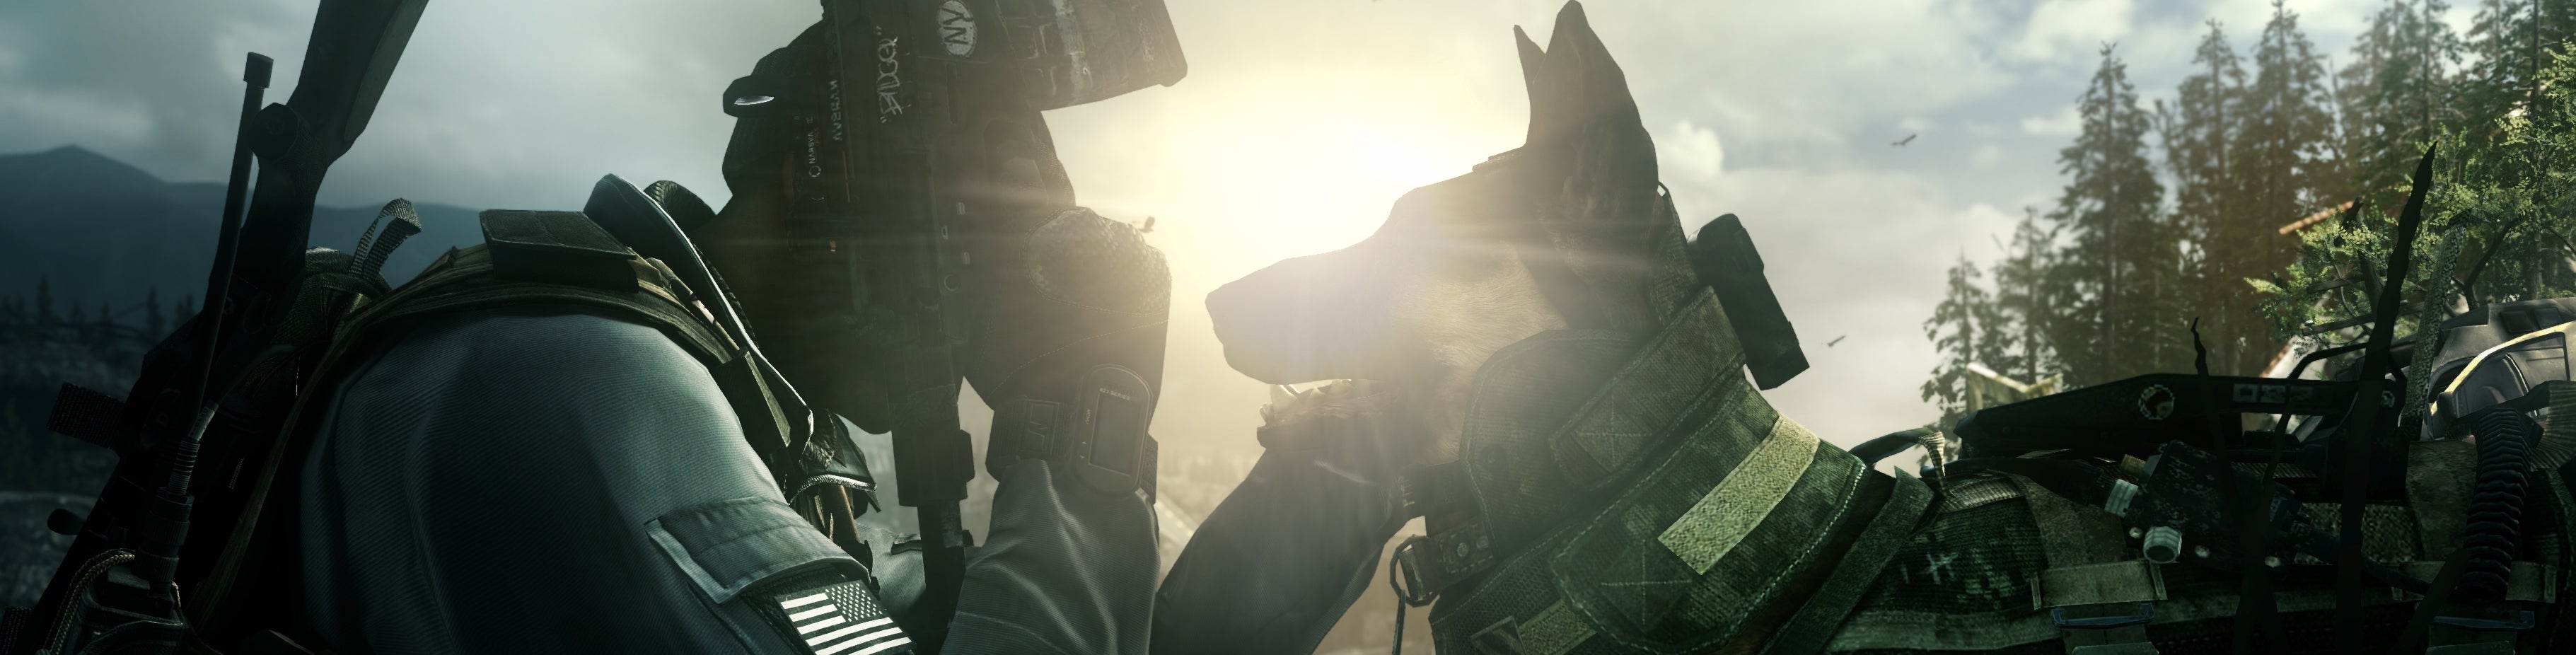 Bilder zu Eg.de Frühstart - Call of Duty: Ghosts, Microsoft, Shaq Fu